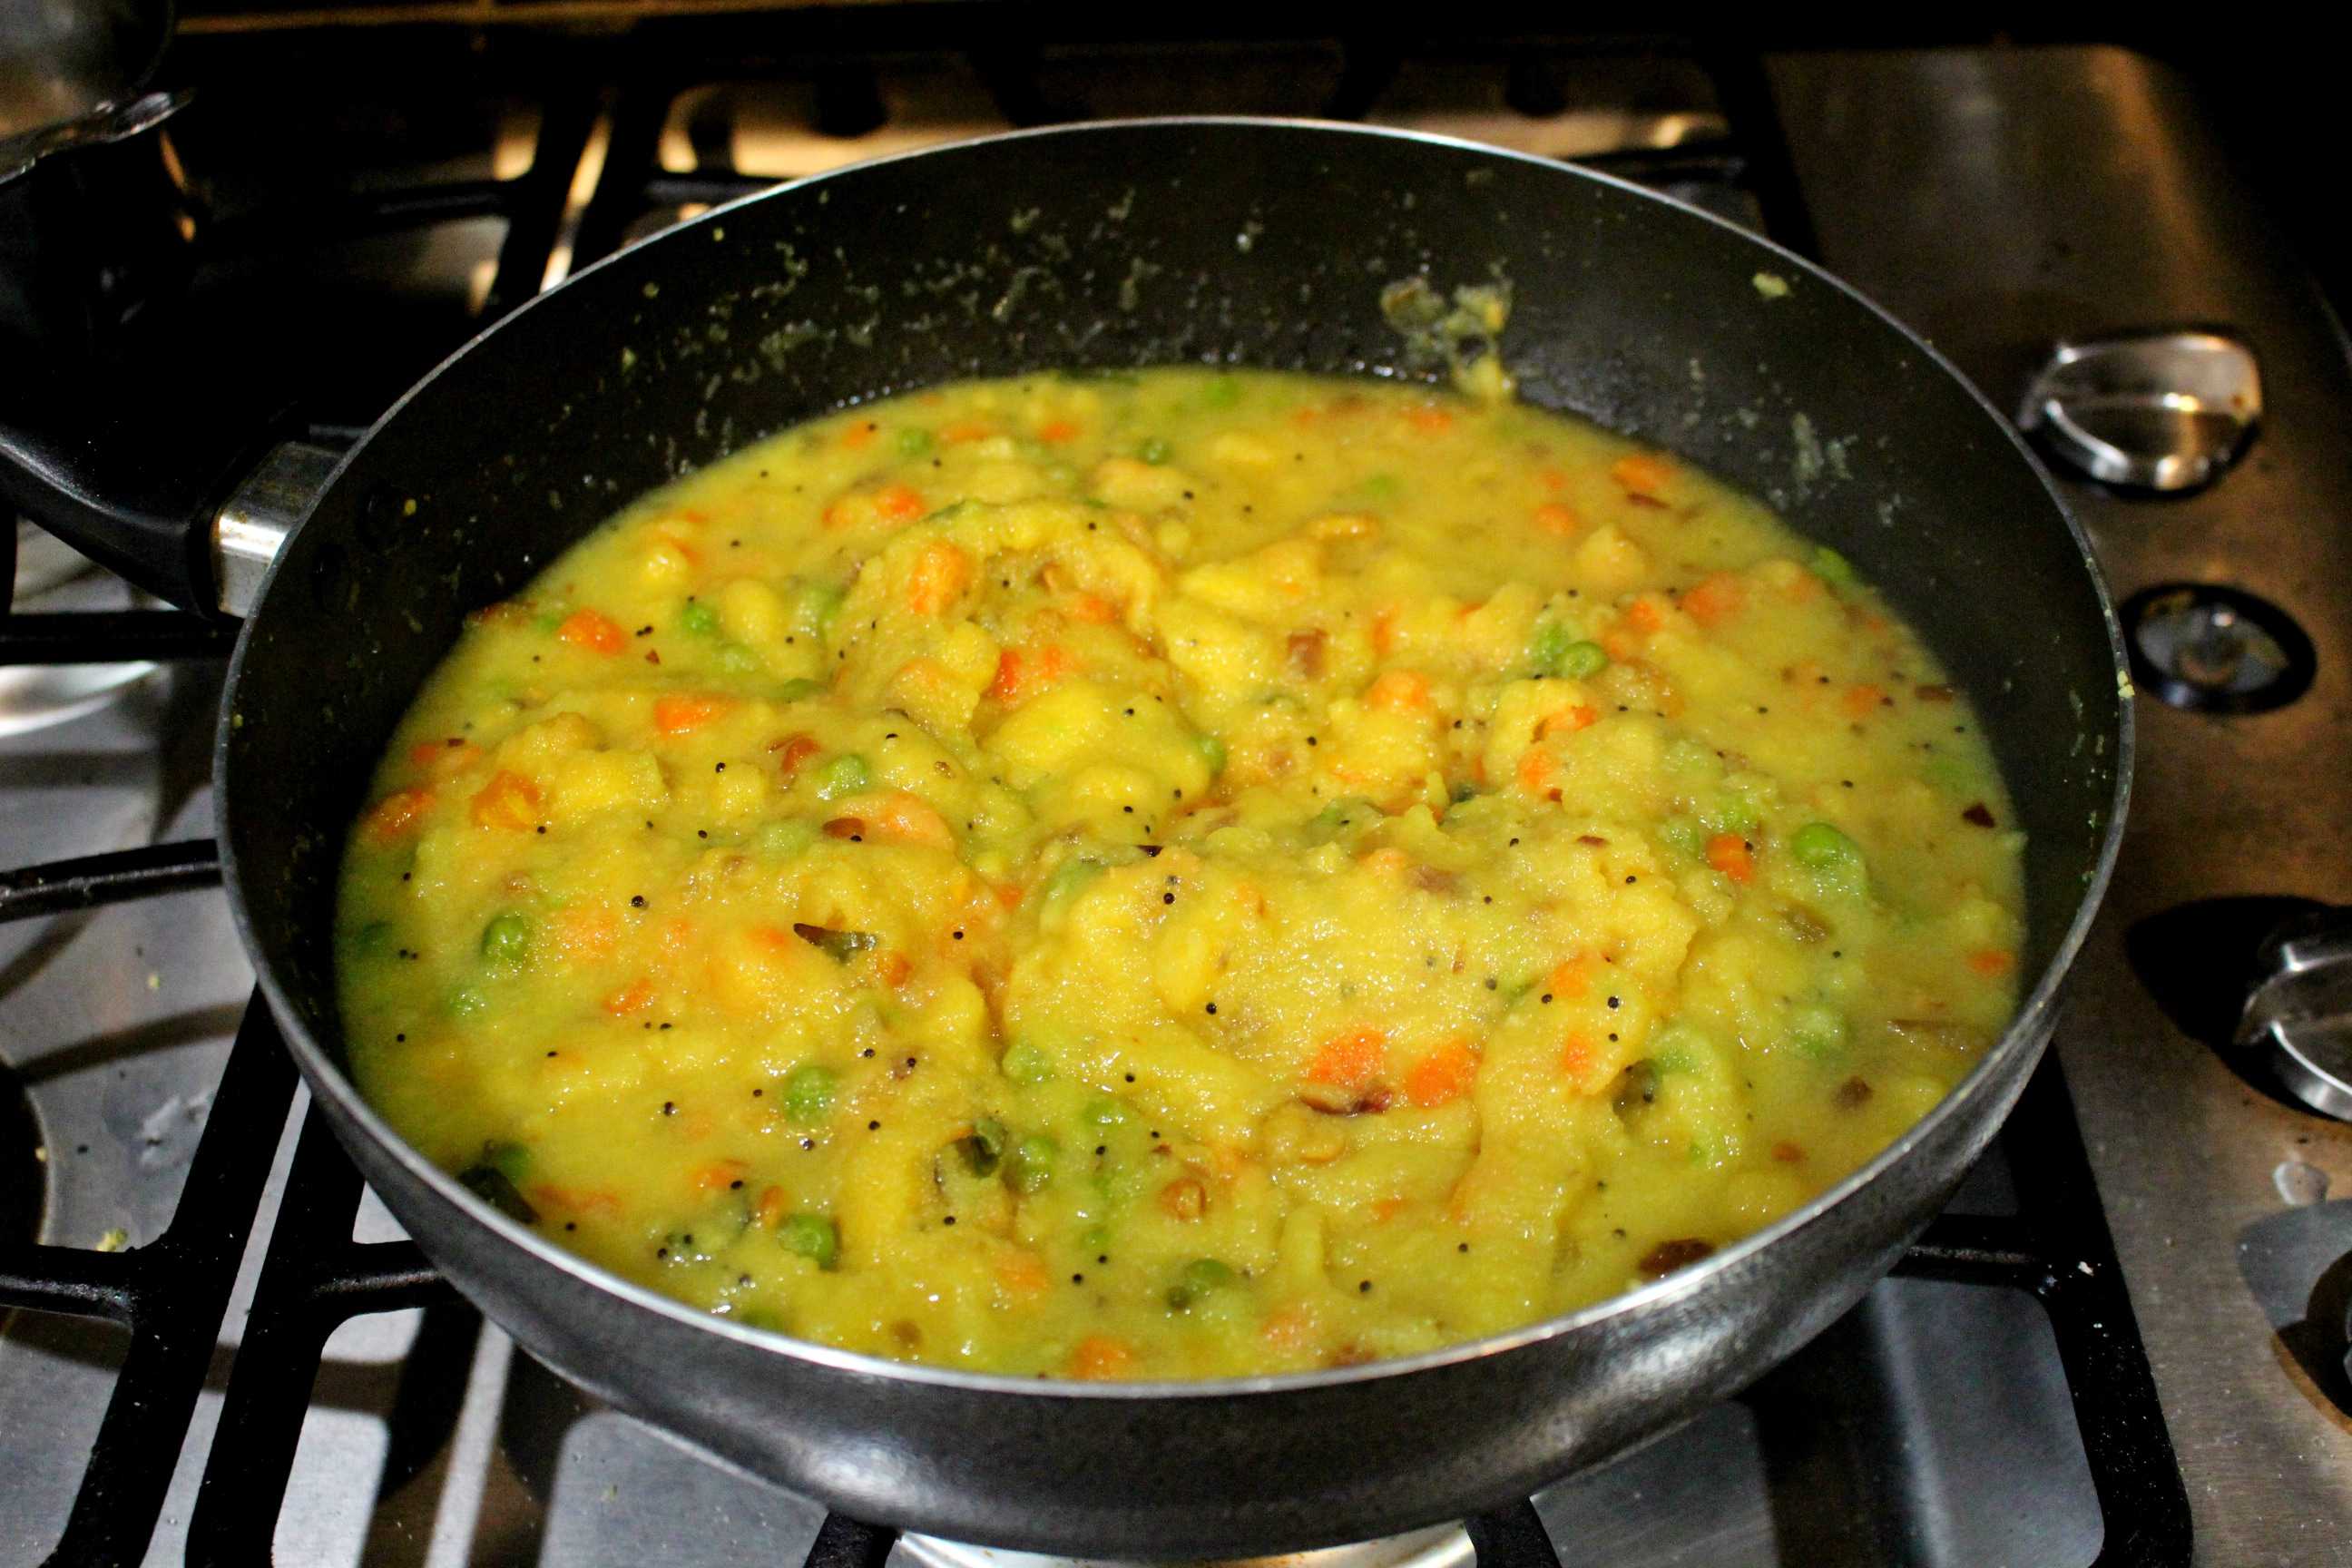 Adding Rava to the vegetables